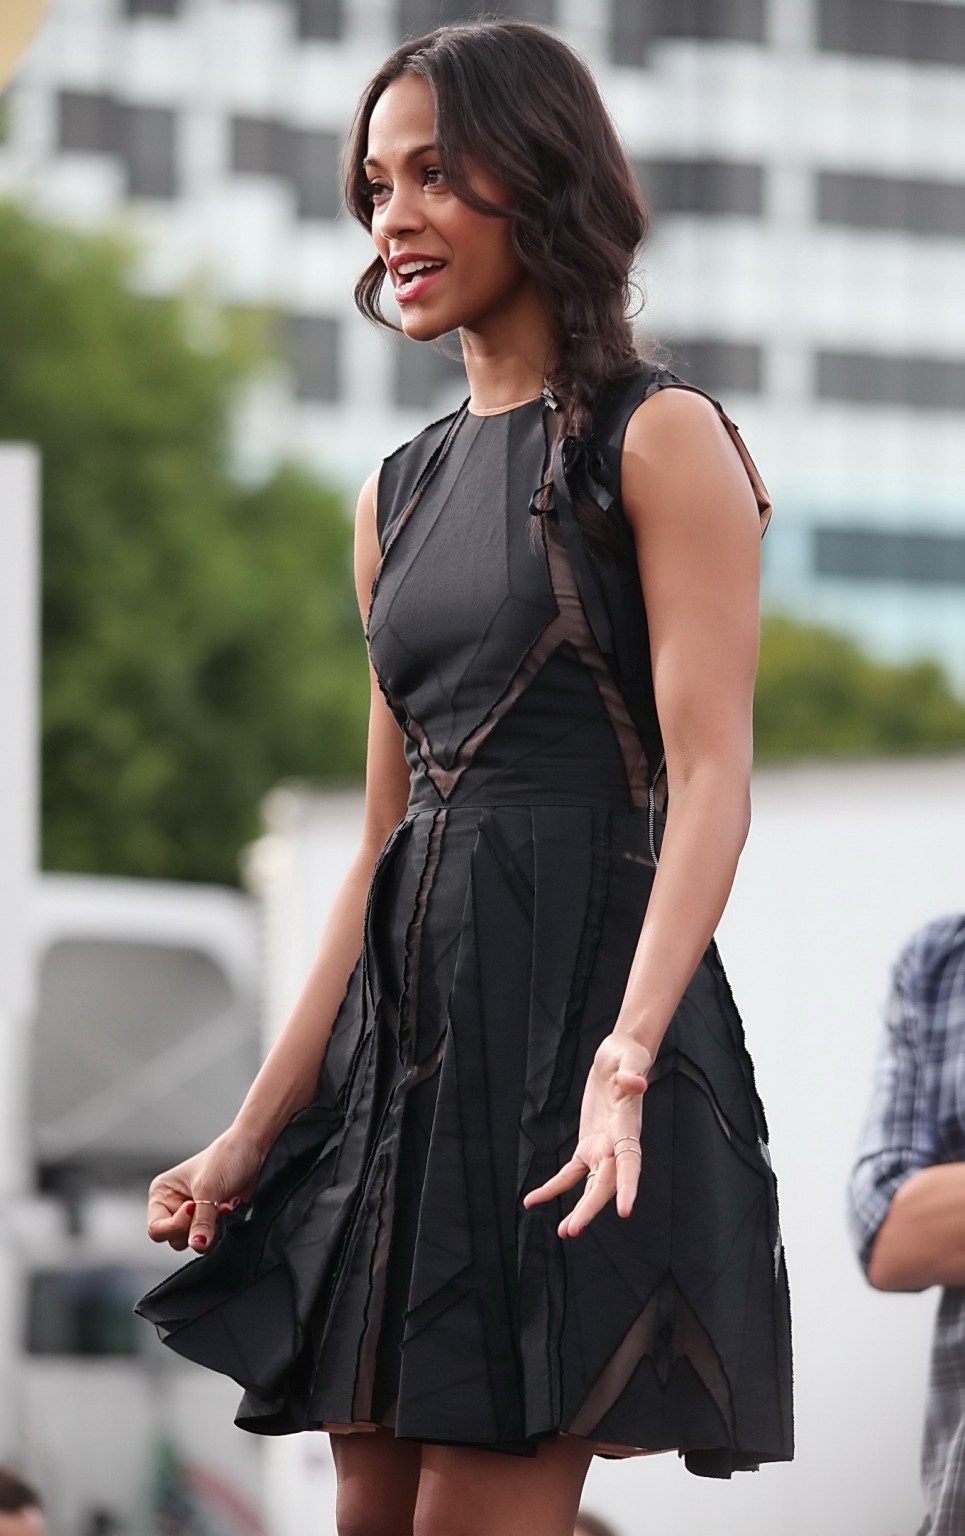 Zoe Saldana wearing black partially see-through mini dress on 'Extra' set at the #75211097